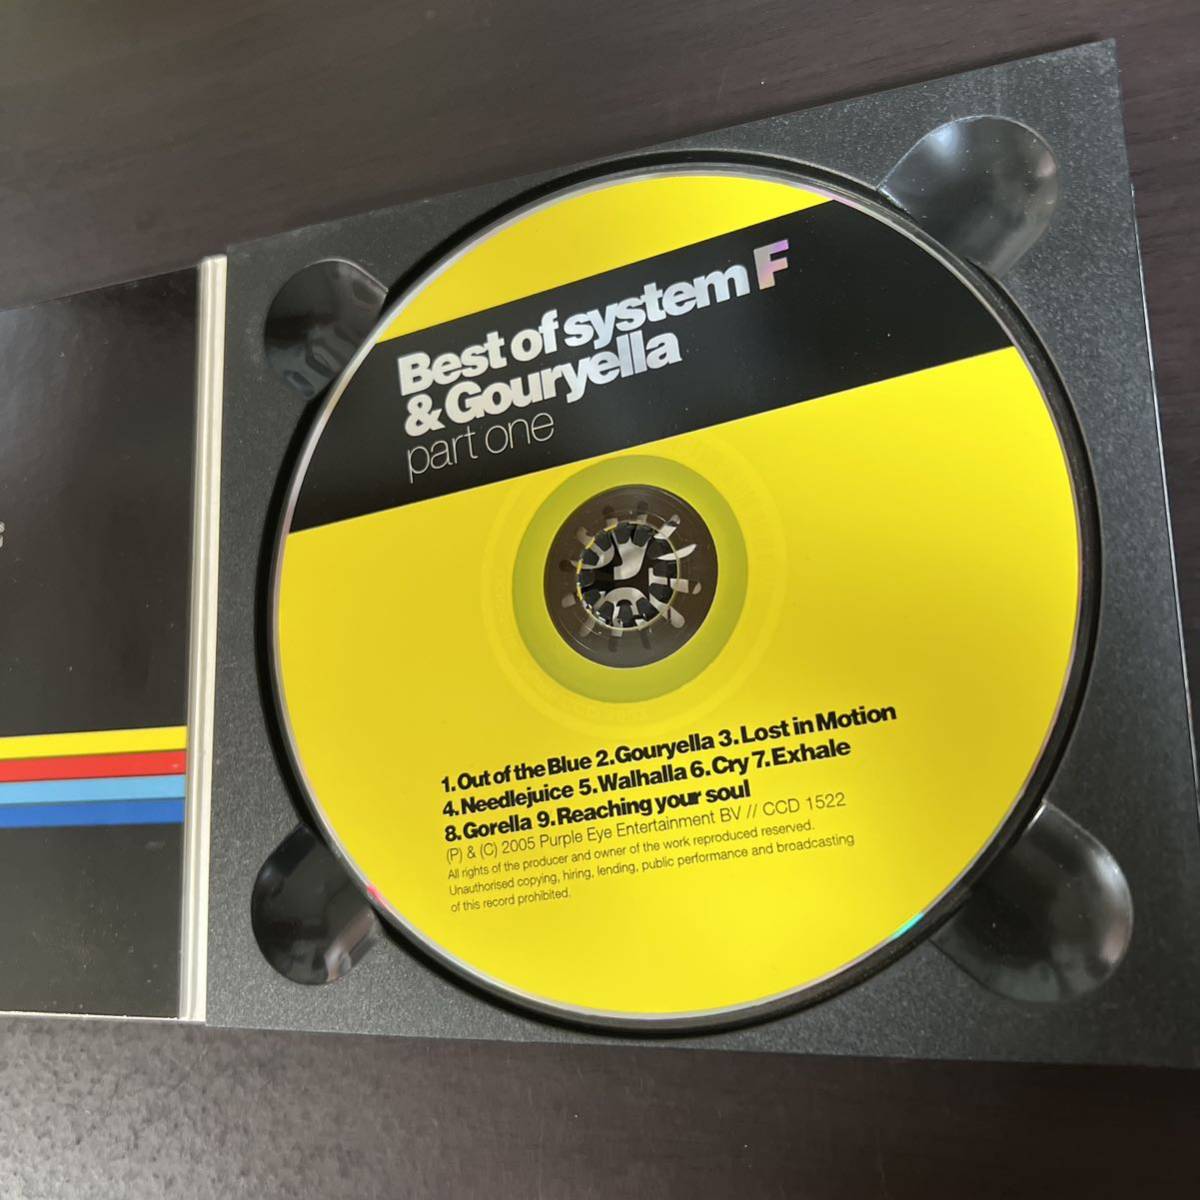 Best of system F & Gouryella part one ☆ ビートマニア 2DX beatmania IIDX CD